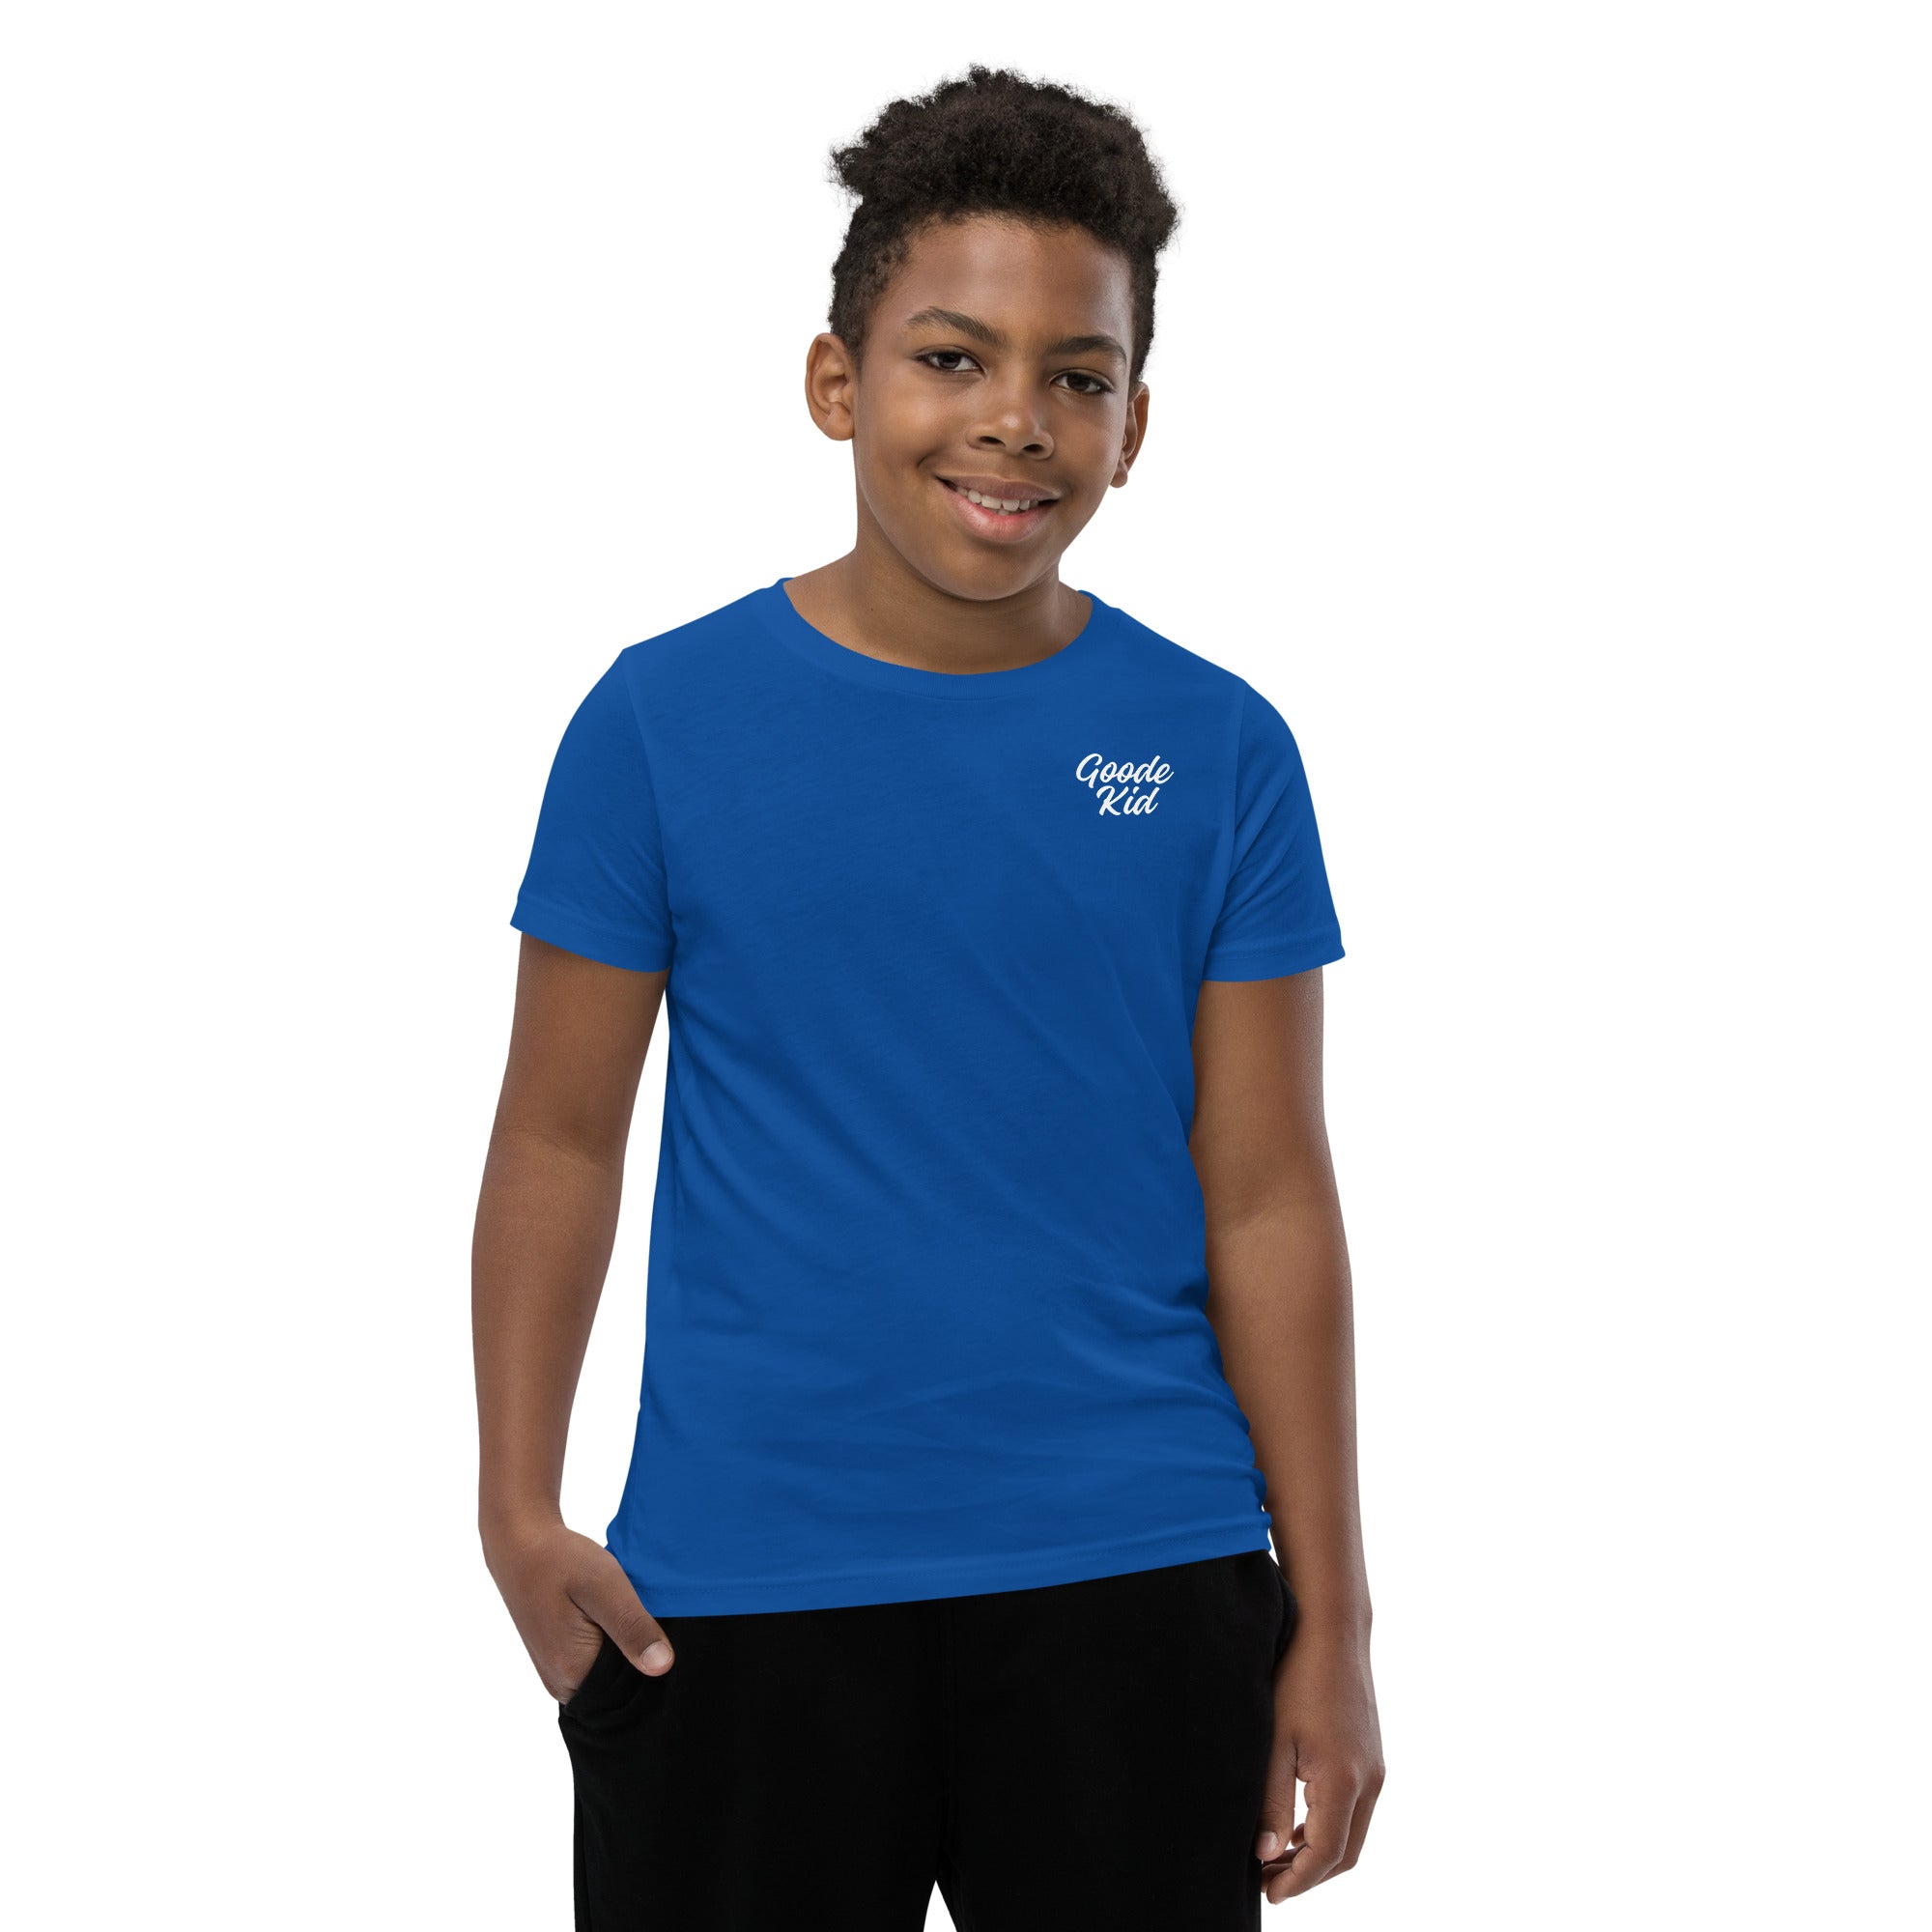 Goode Kid T-shirt | Youth True Royal / S kids t-shirts Jolly & Goode